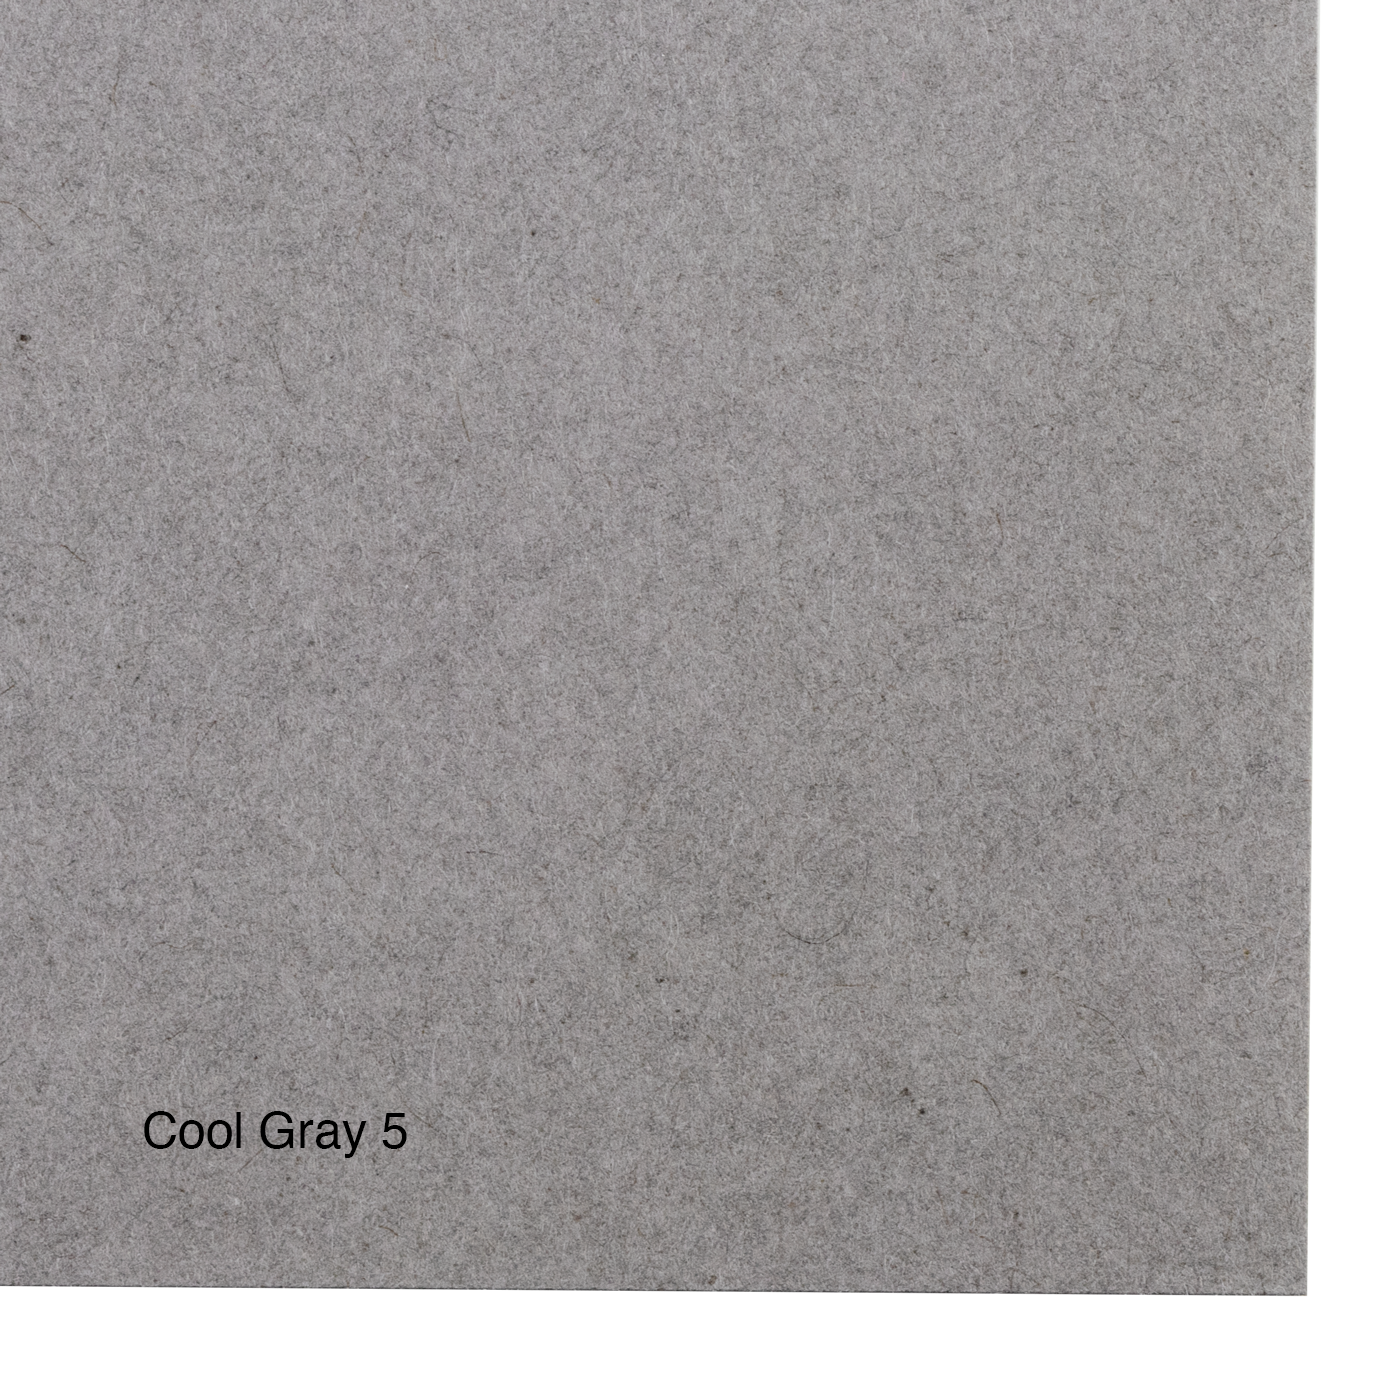 Yamamoto Paper Tasting Set- Gray Vol. 2